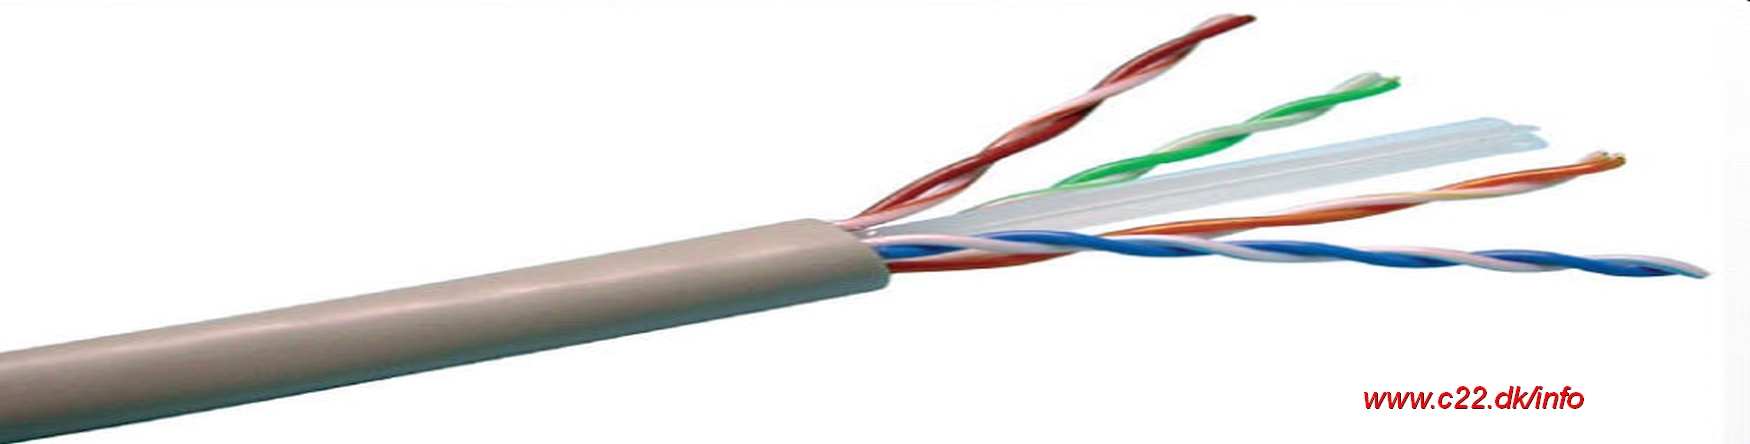 CATV on twisted pair cabling elektronikudvikling